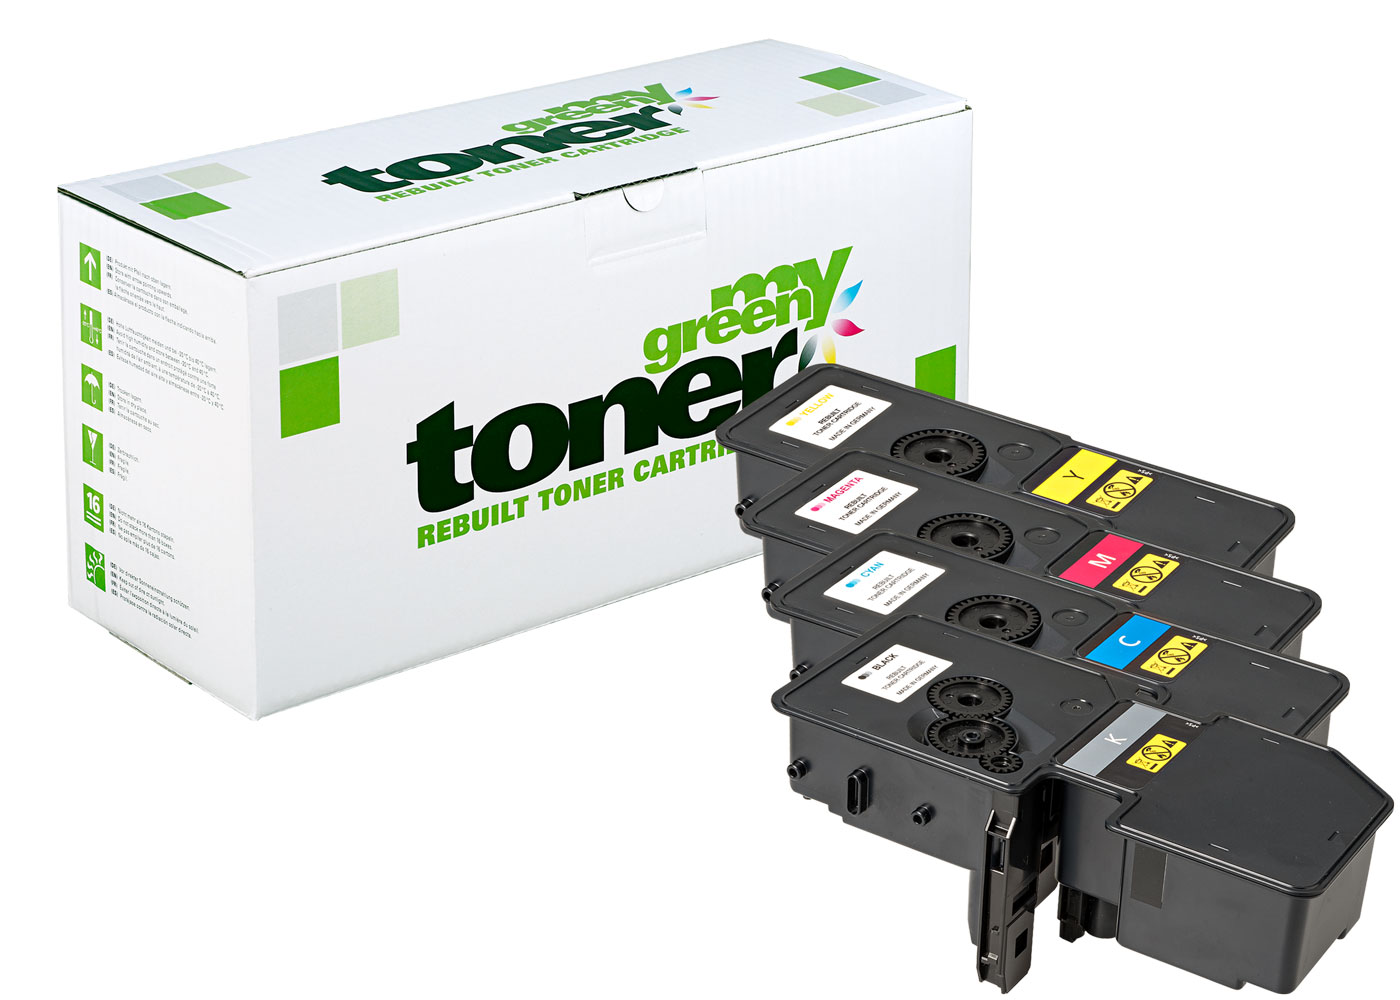 Rebuilt toner cartridge for Kyocera Ecosys MA2100, PA2100